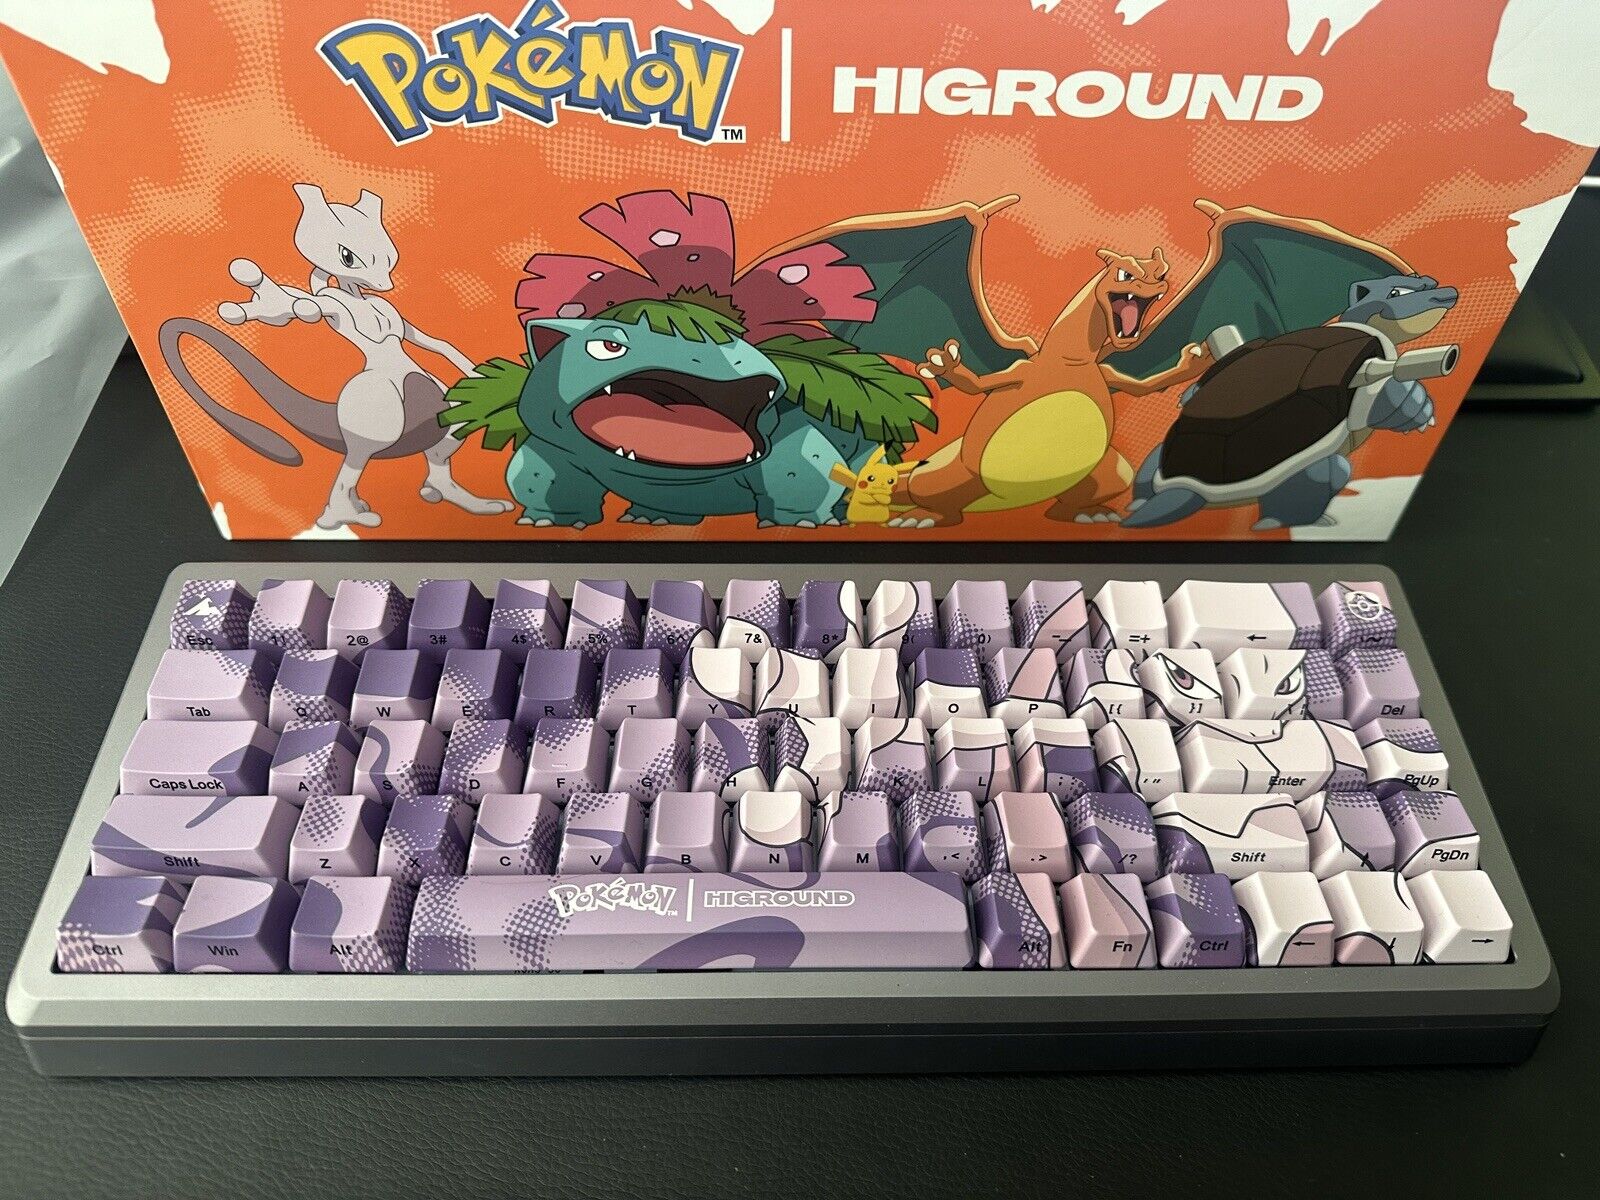 Pokémon + HG Summit 65 Keyboard 2.0 - Mewtwo